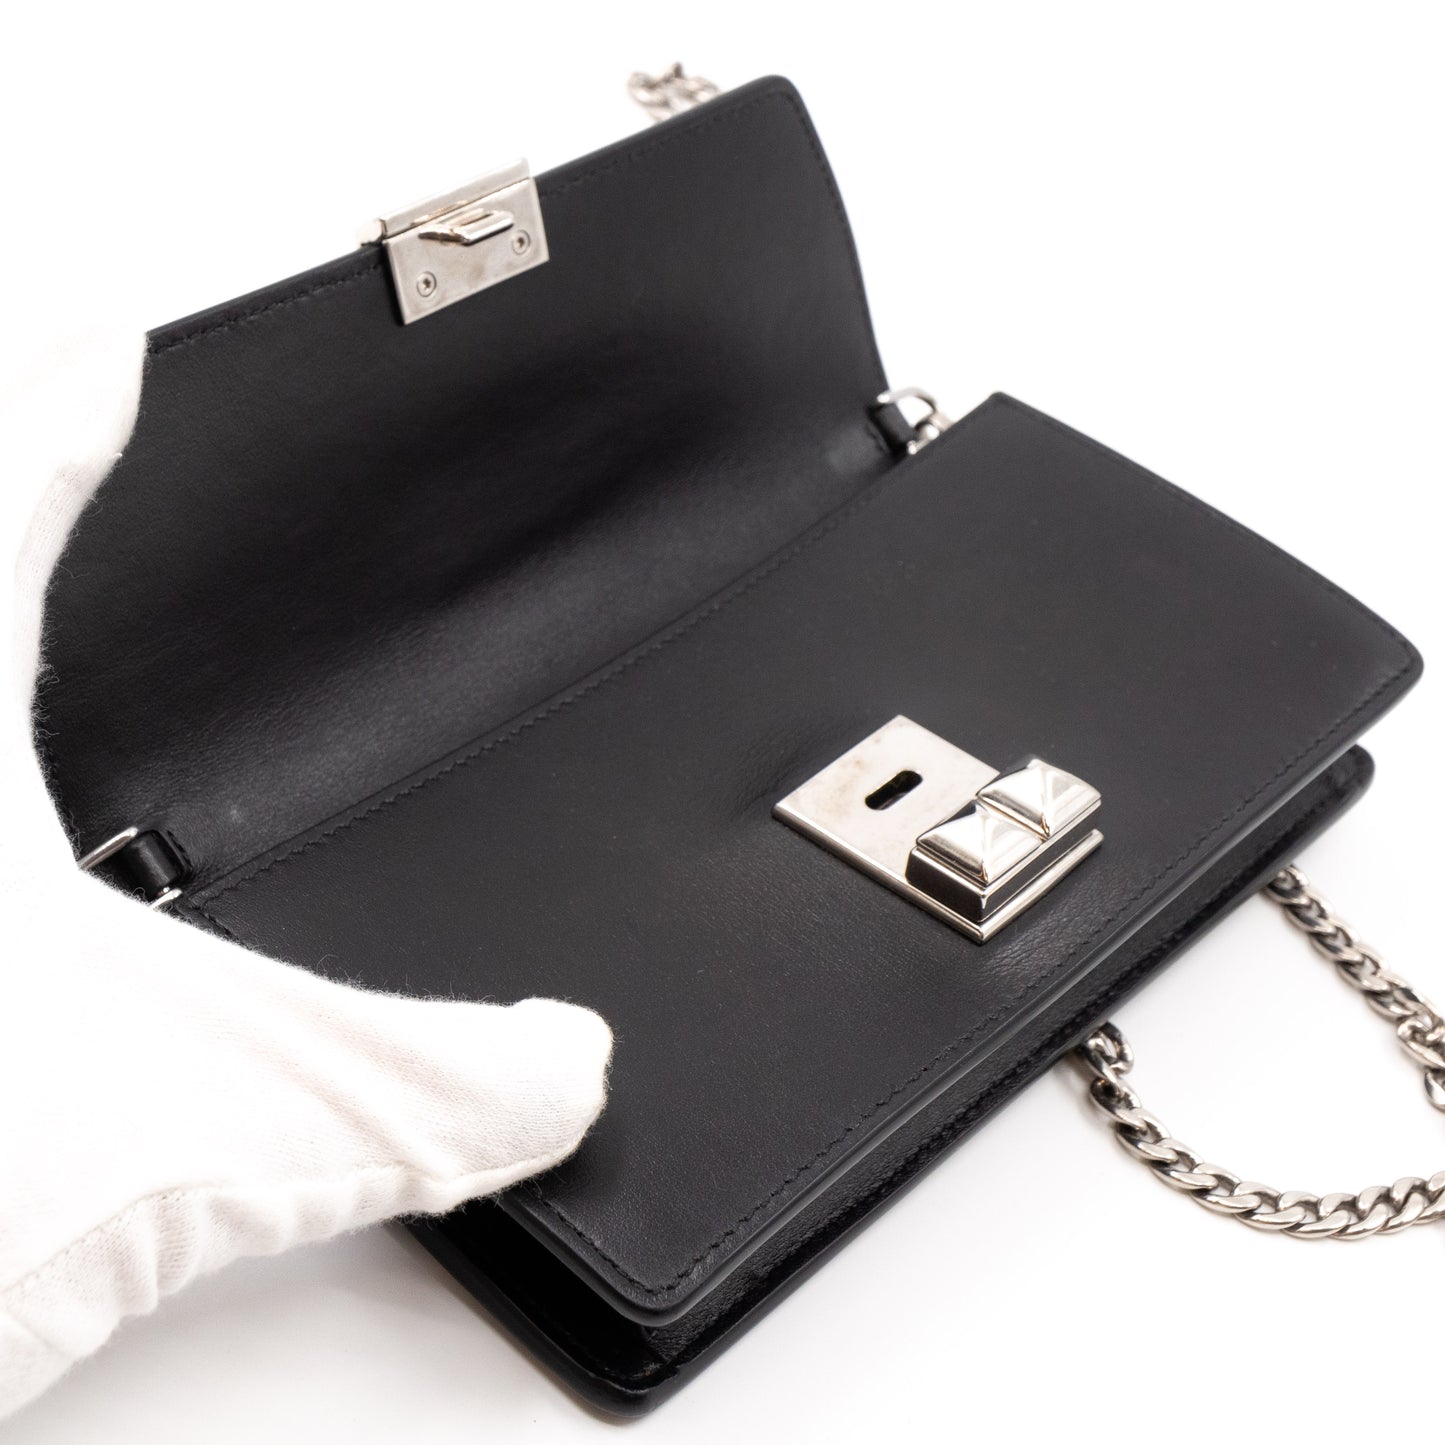 Elektra Studded Wallet on Chain Black Leather